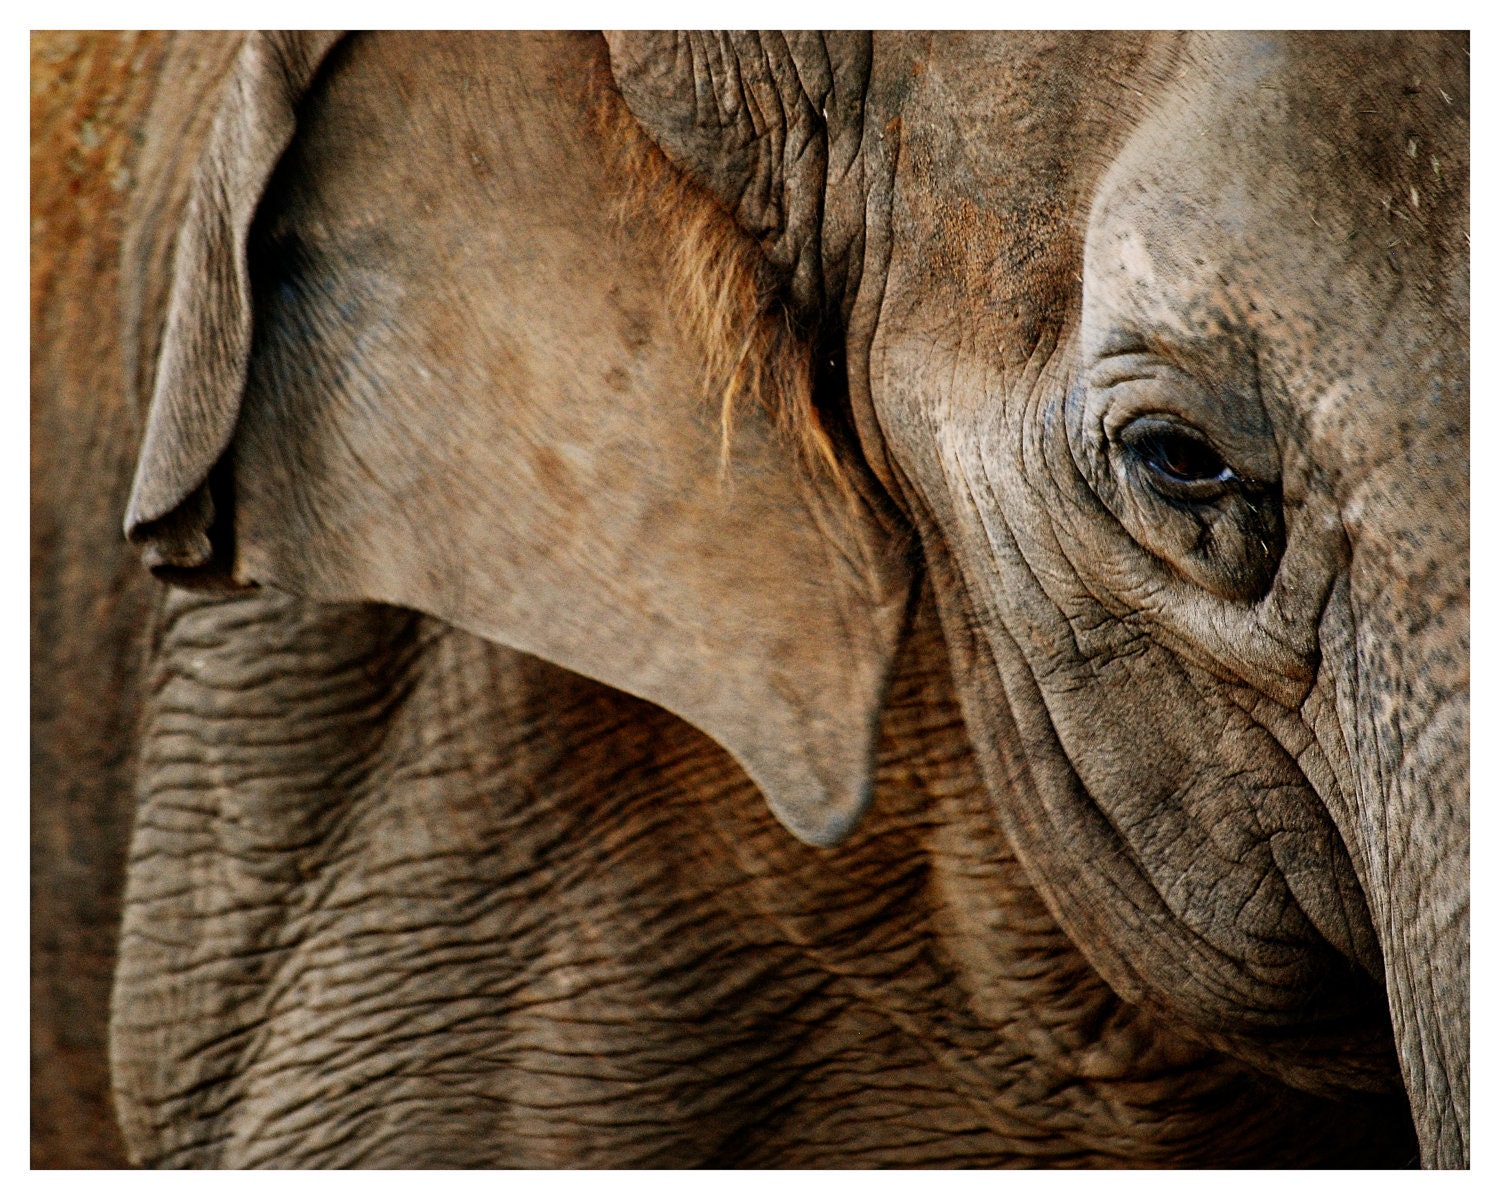 fine art image of an elephant, elephant's eye, gentle giant, image by enframe photography by rachel boyer